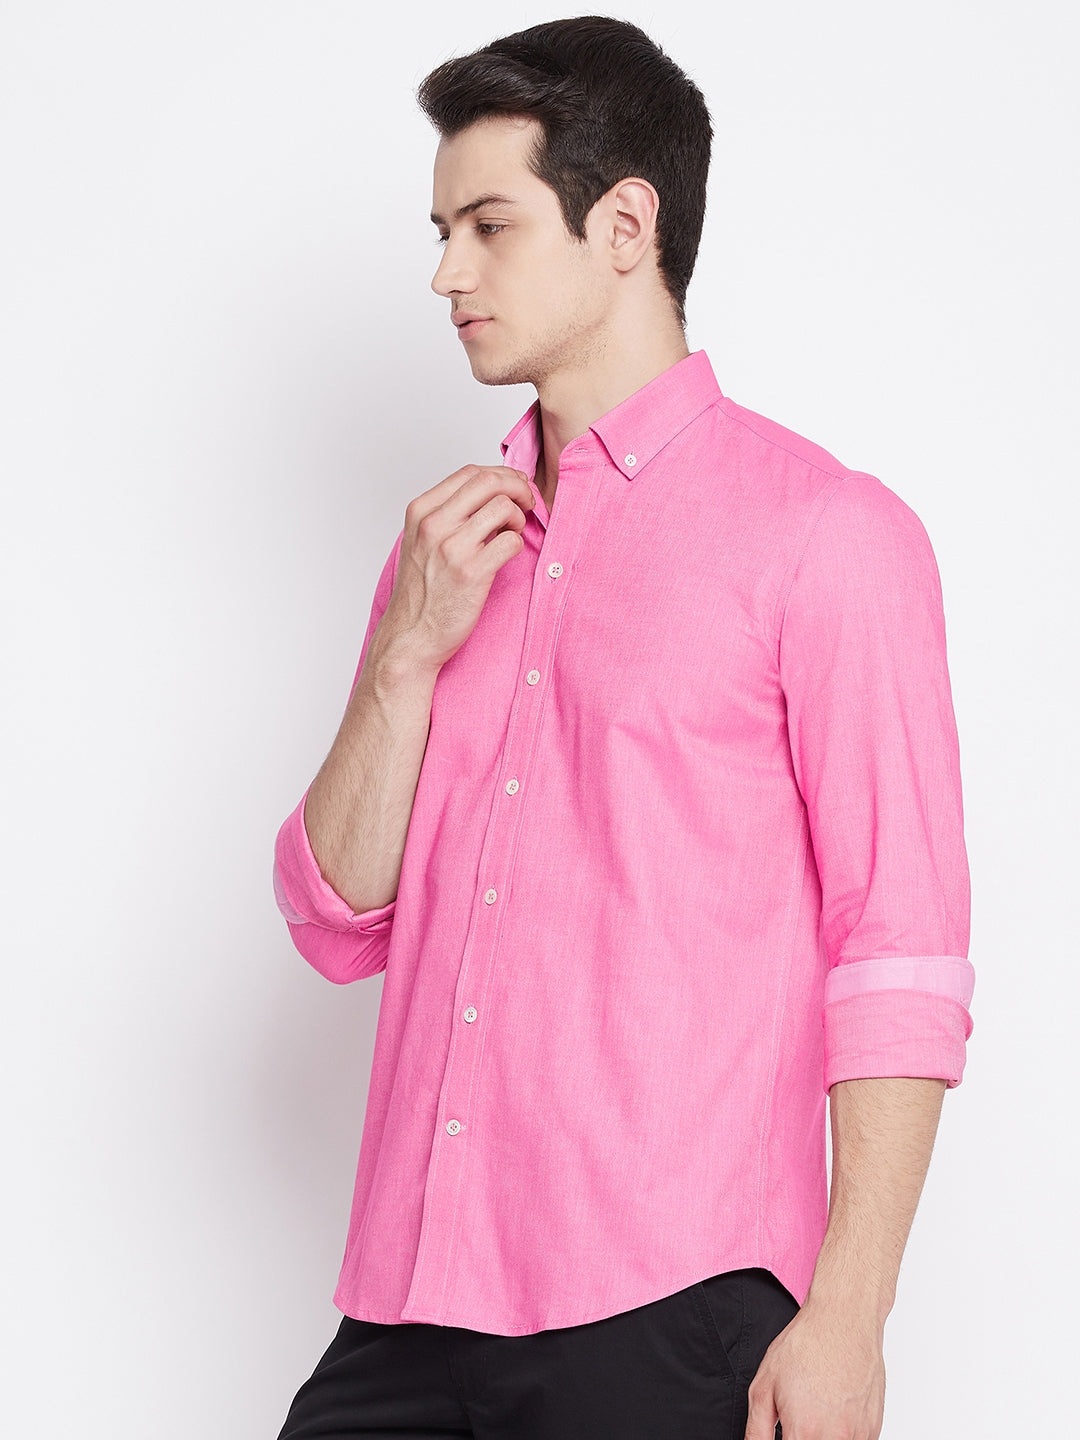 Regis Pink Oxford Cotton Shirt